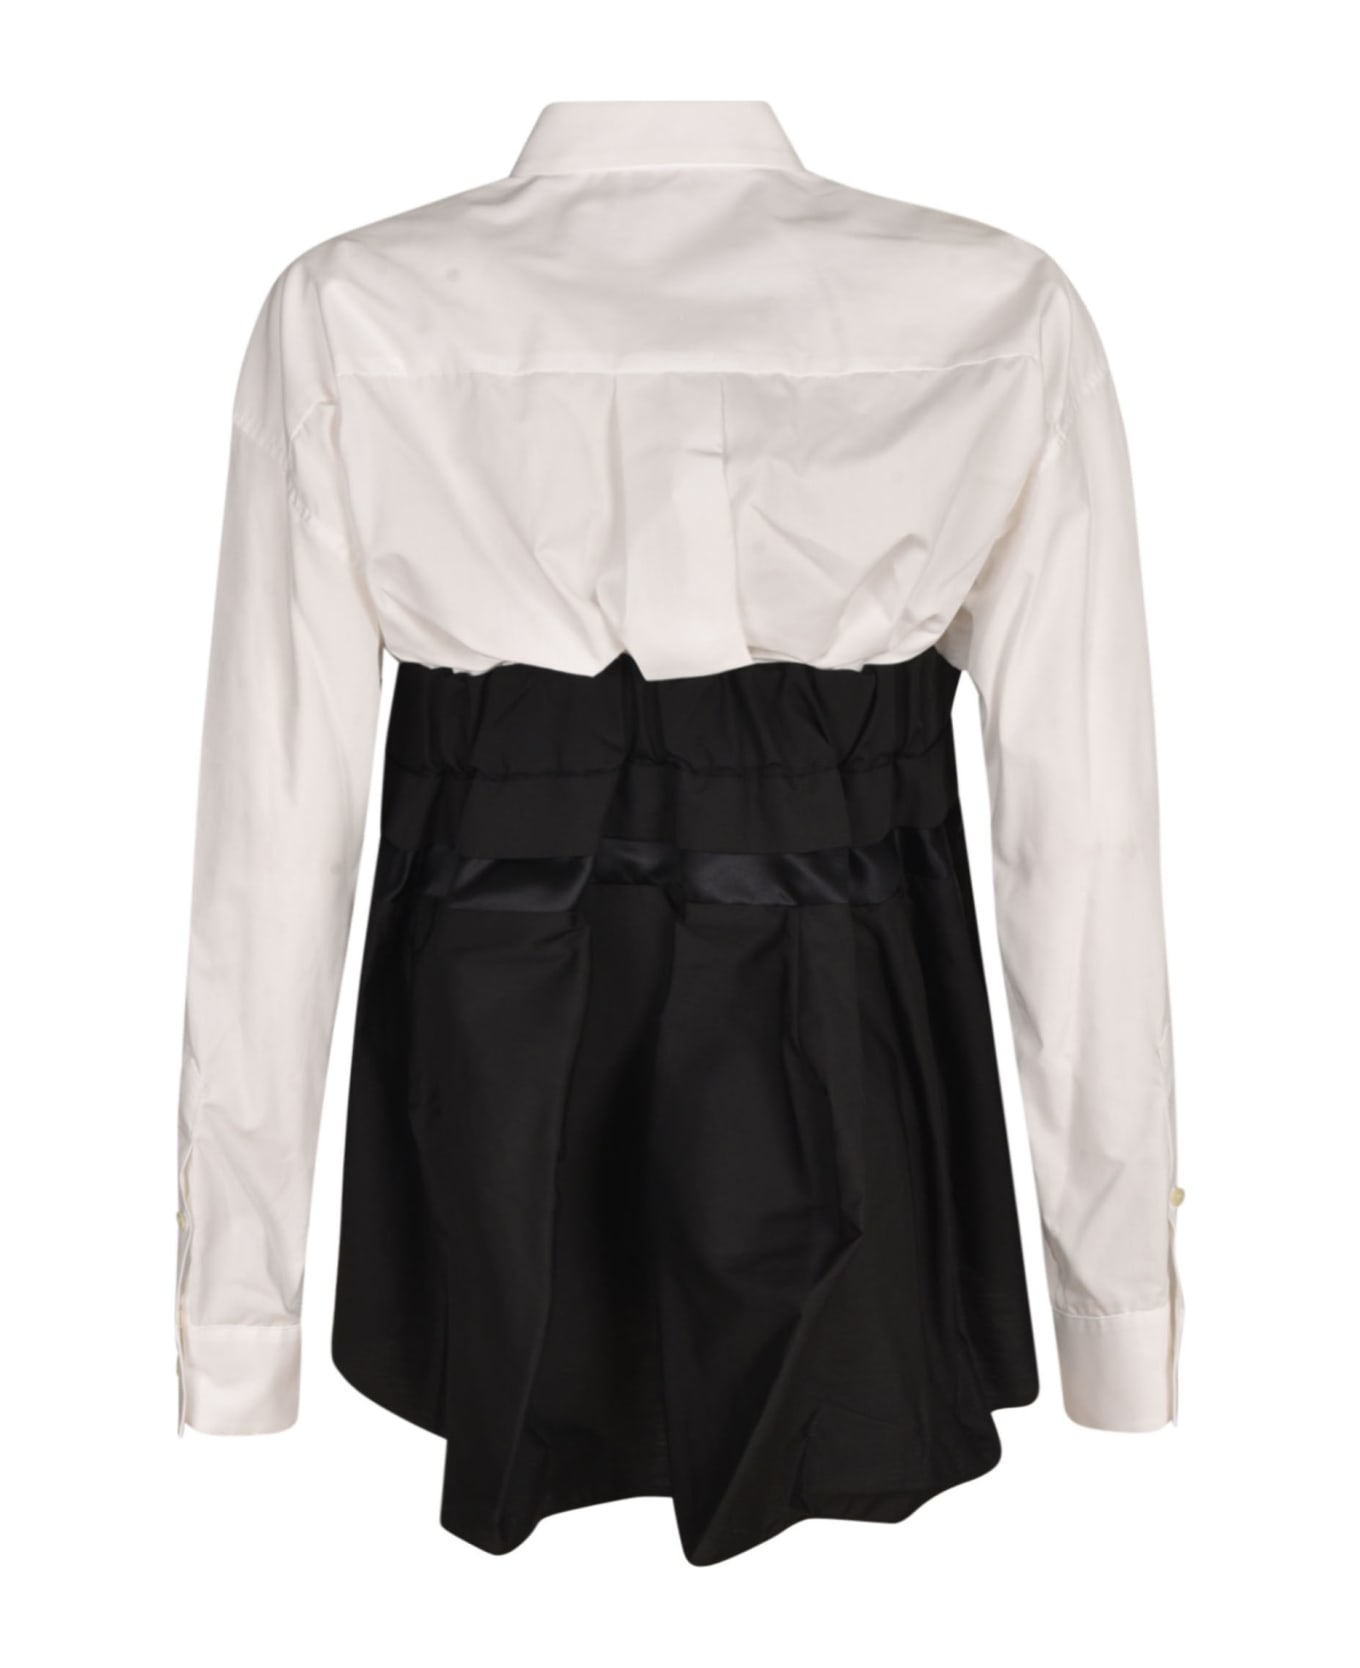 Sacai Concealed Shirt - White/Black